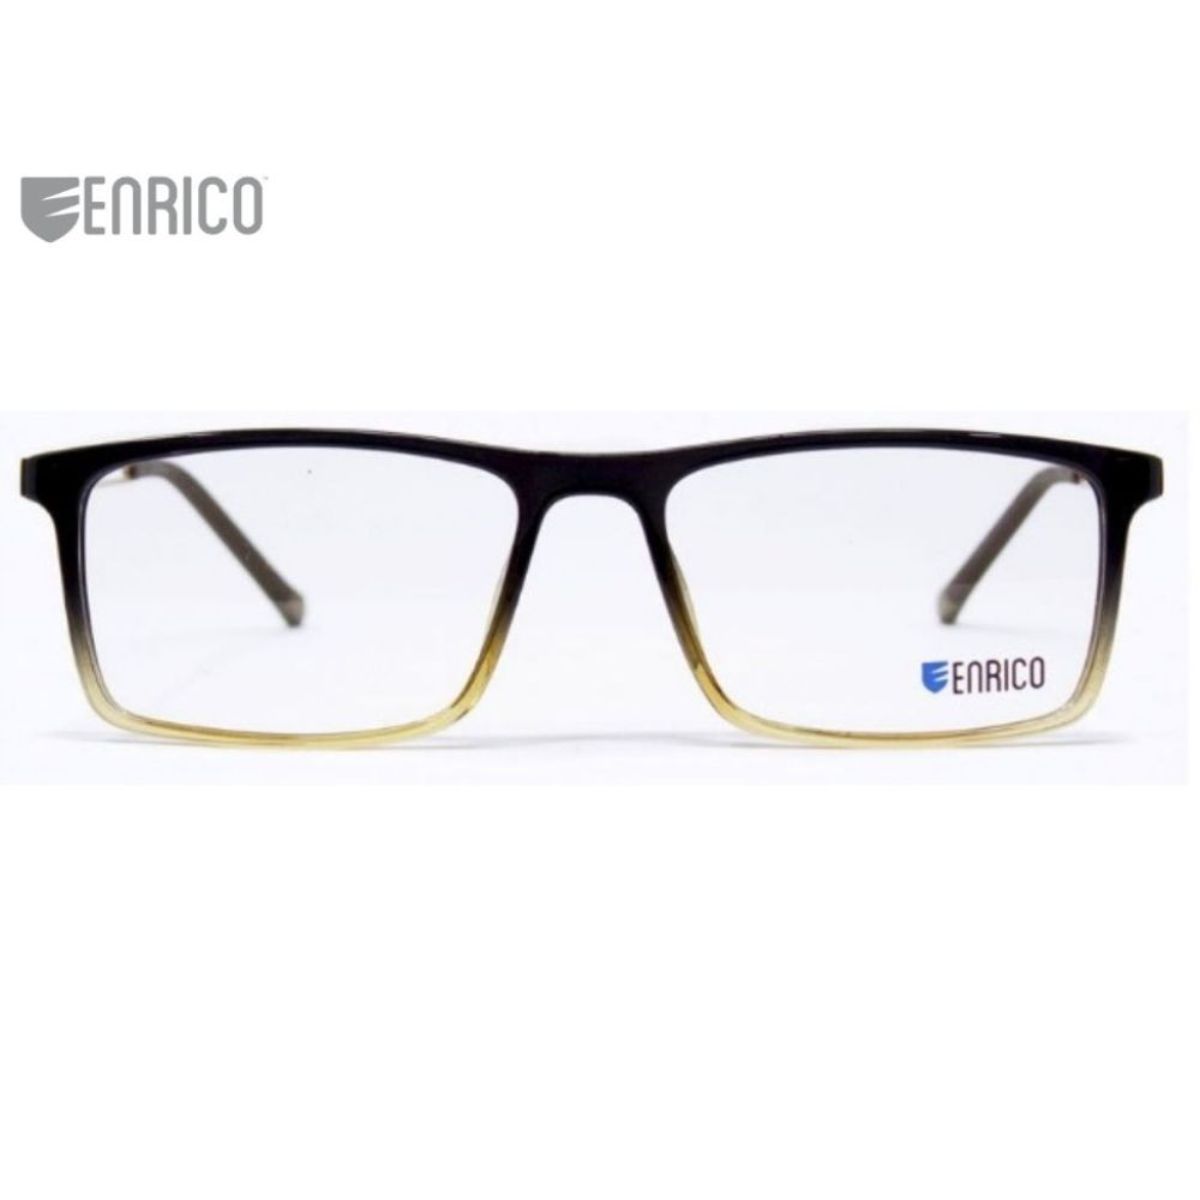 Enrico Bluno Computer Glasses with Blue Light Filter|Reading Glasses|Zero Power Glasses-EN1 104-4B